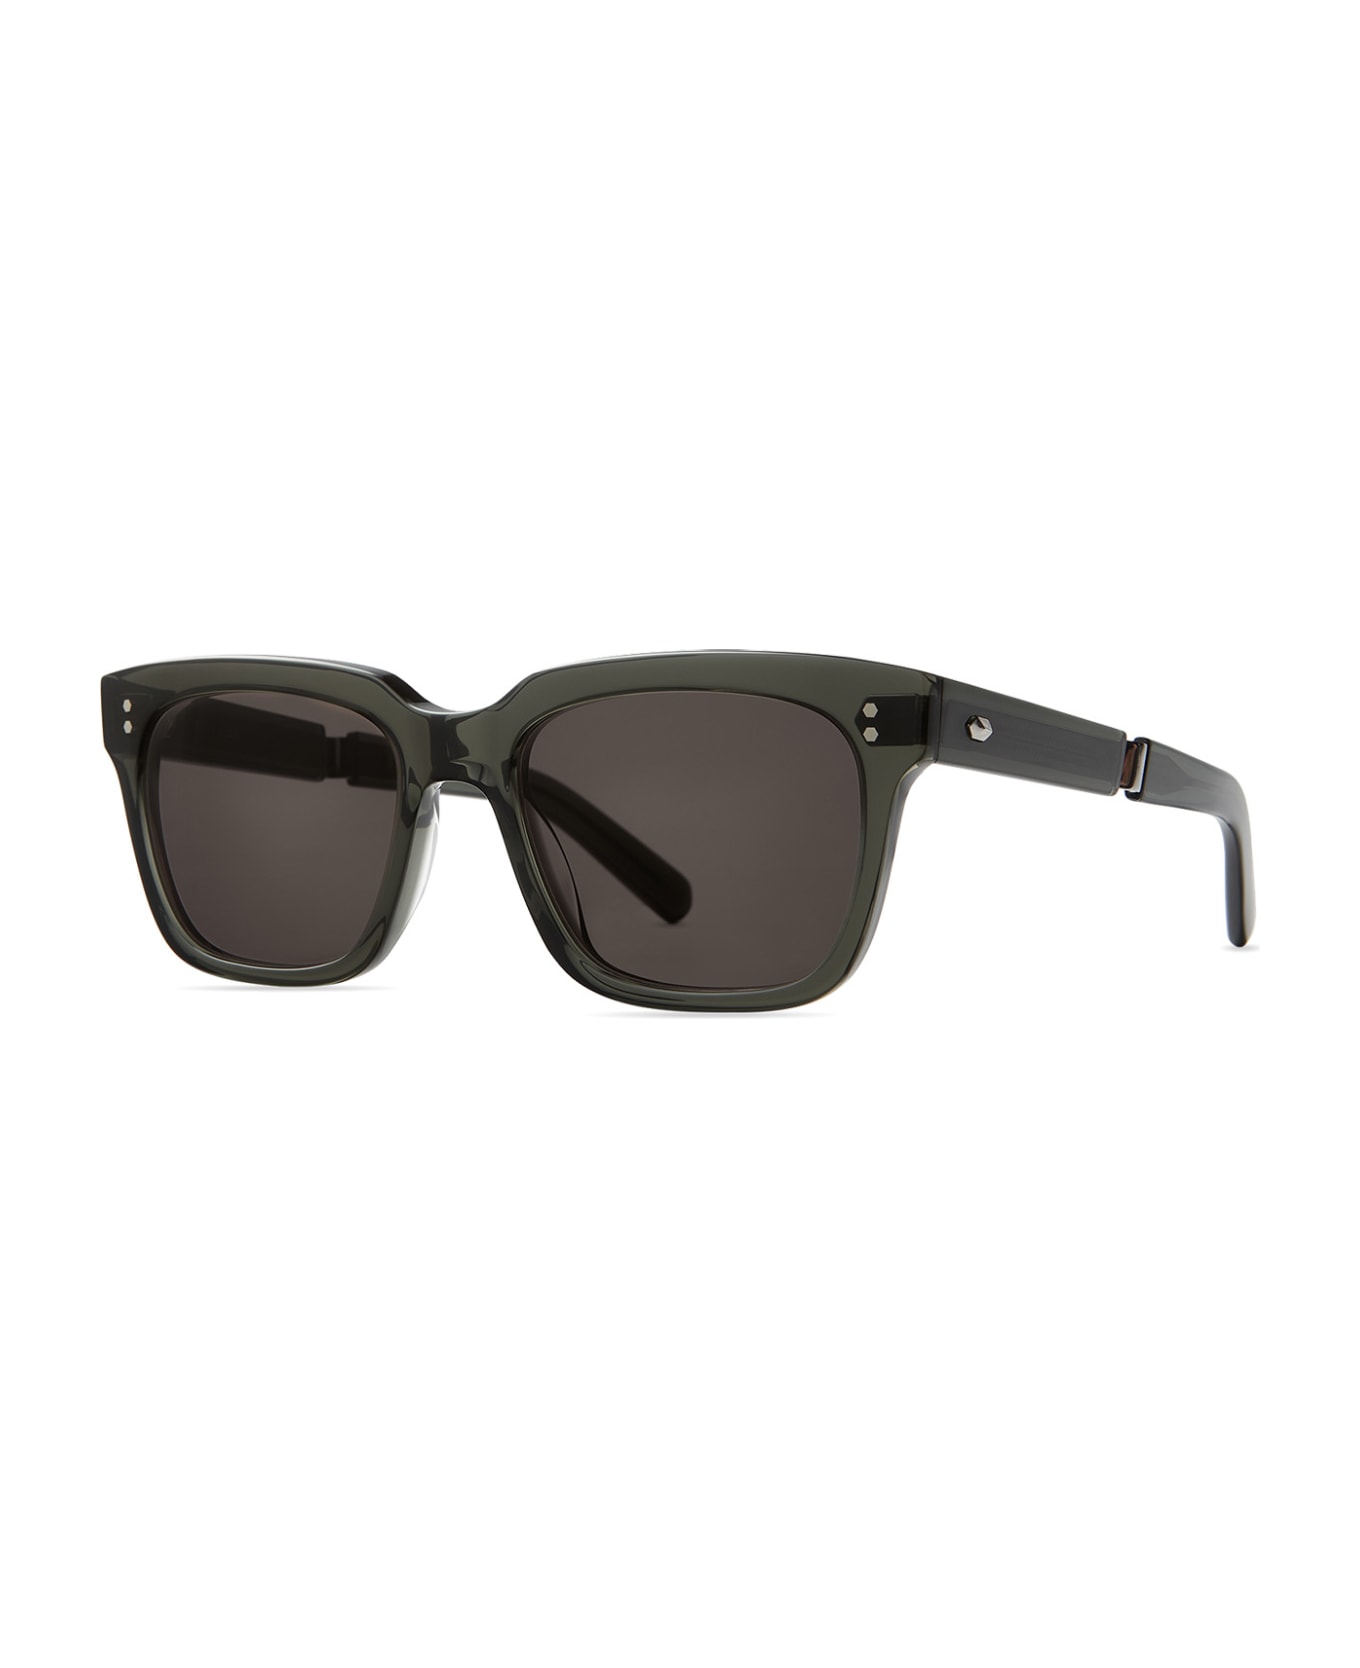 Mr. Leight Arnie S Grey Sage-platinum Sunglasses - Grey Sage-Platinum